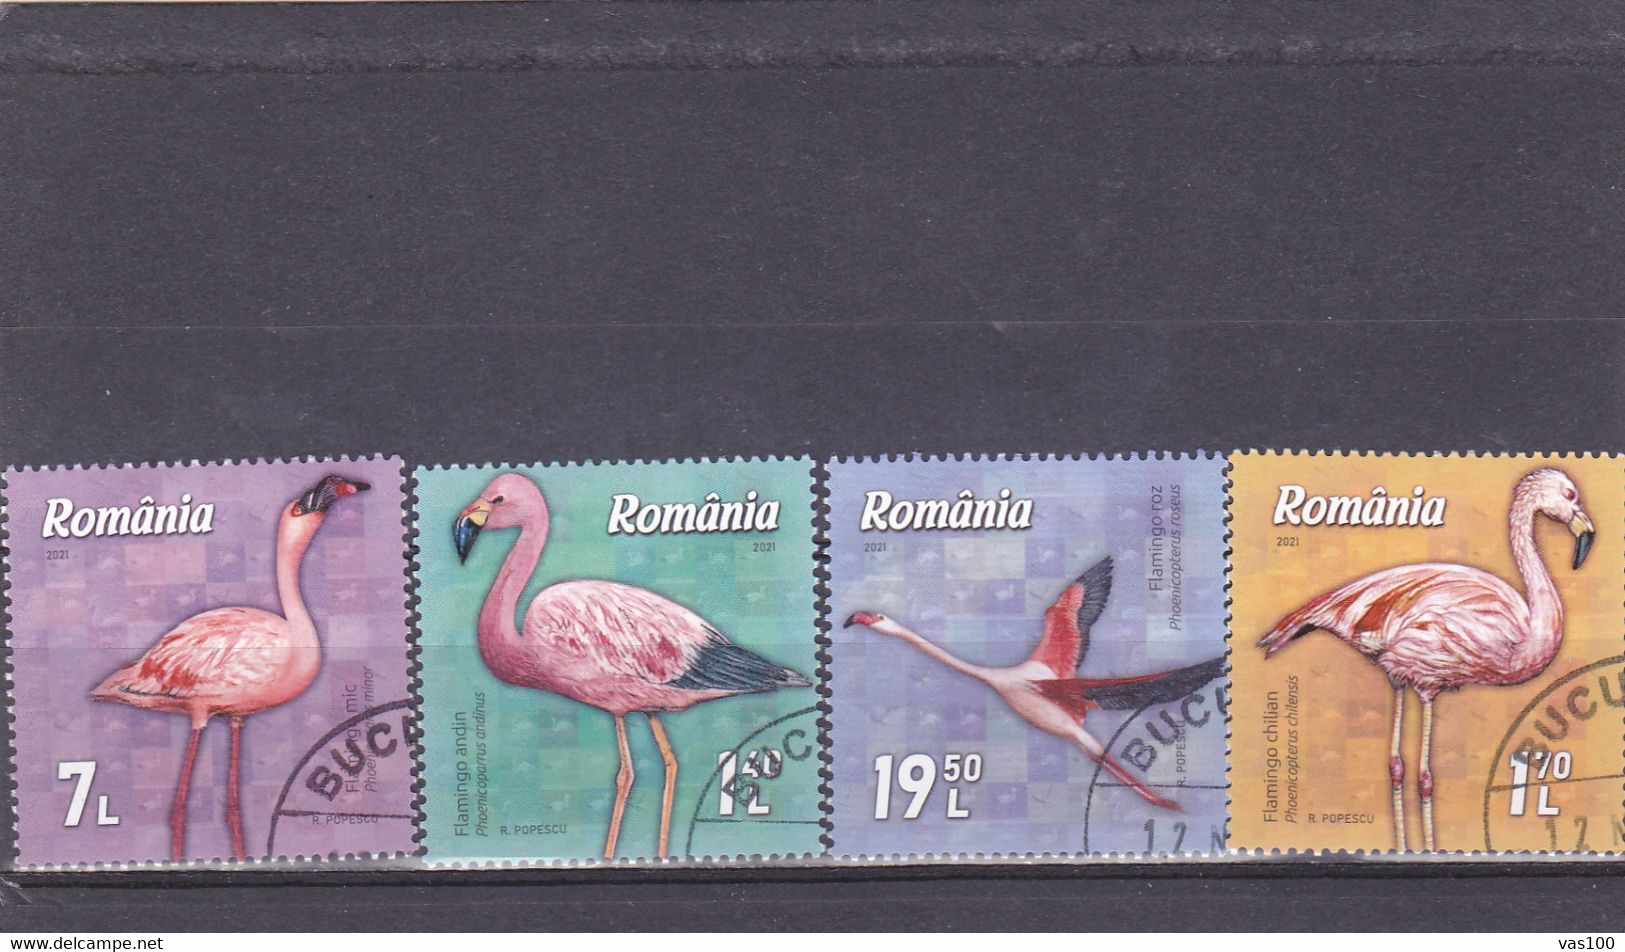 ROMANIA 2021 SET/4 STAMPS BIRDS, FLAMINGO , Stamp Full Set Used. - Usati